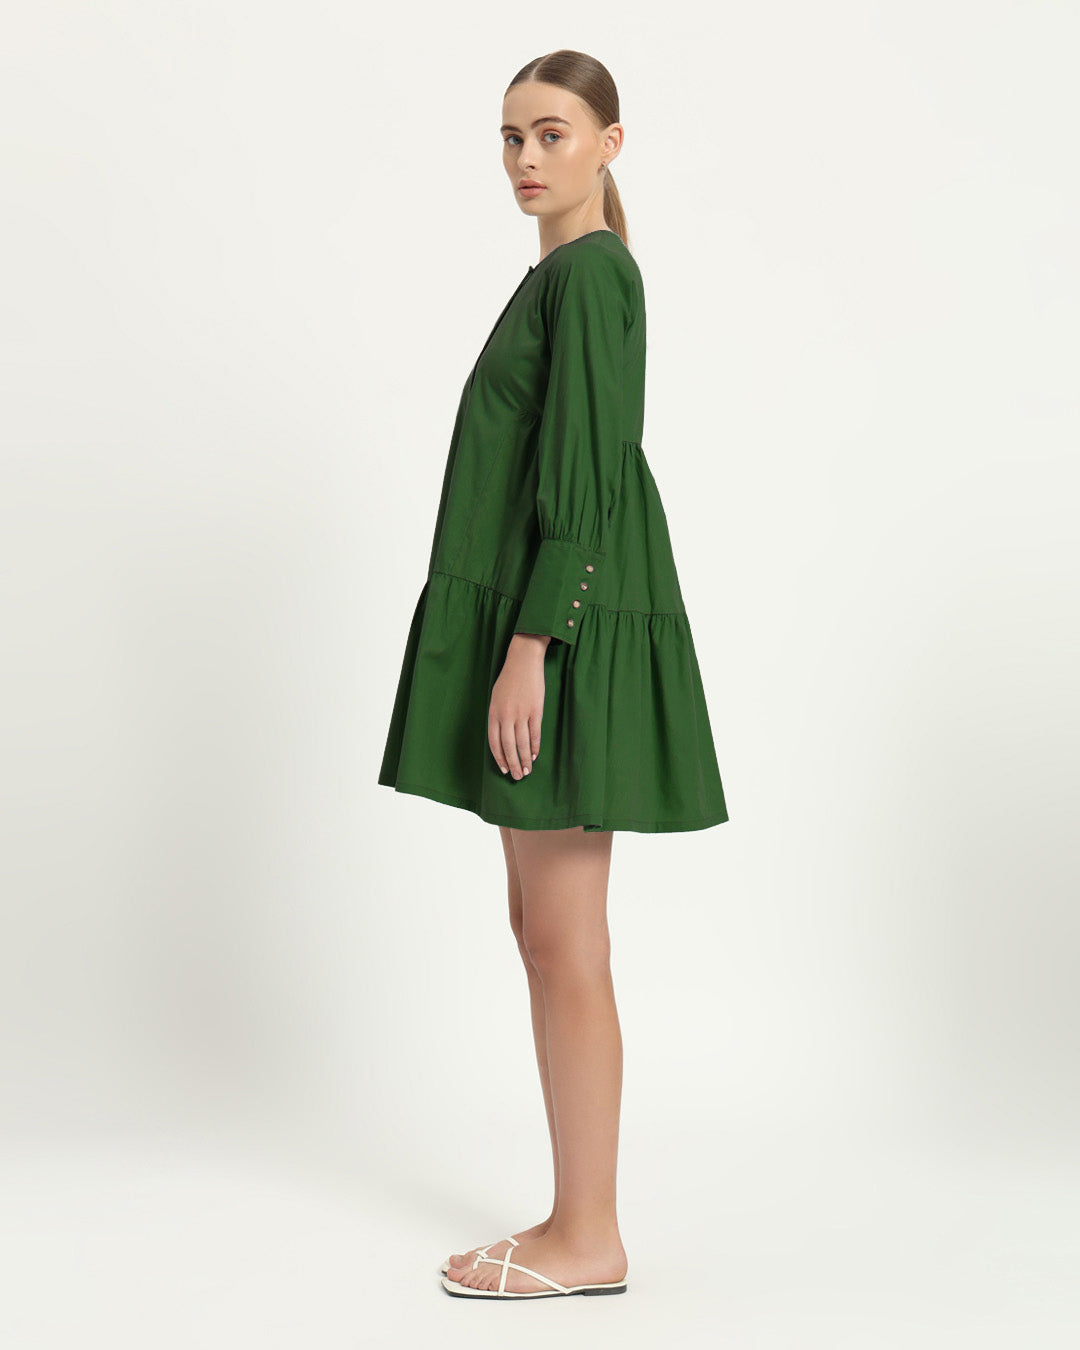 The Brandis Emerald Cotton Dress